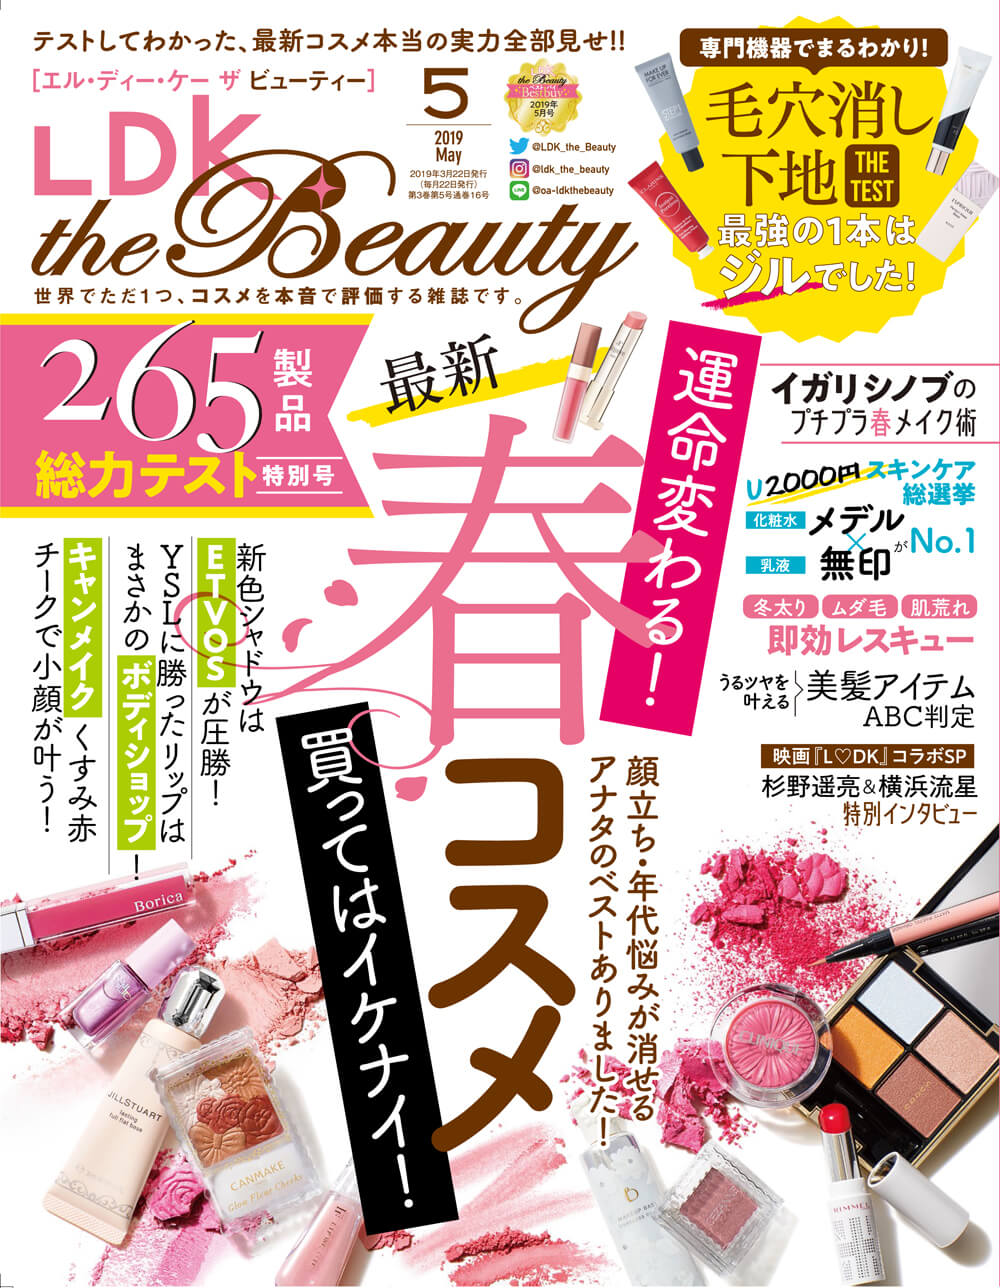 Ldk The Beauty エル ディー ケー ザ ビューティー 19年5月号 晋遊舎online